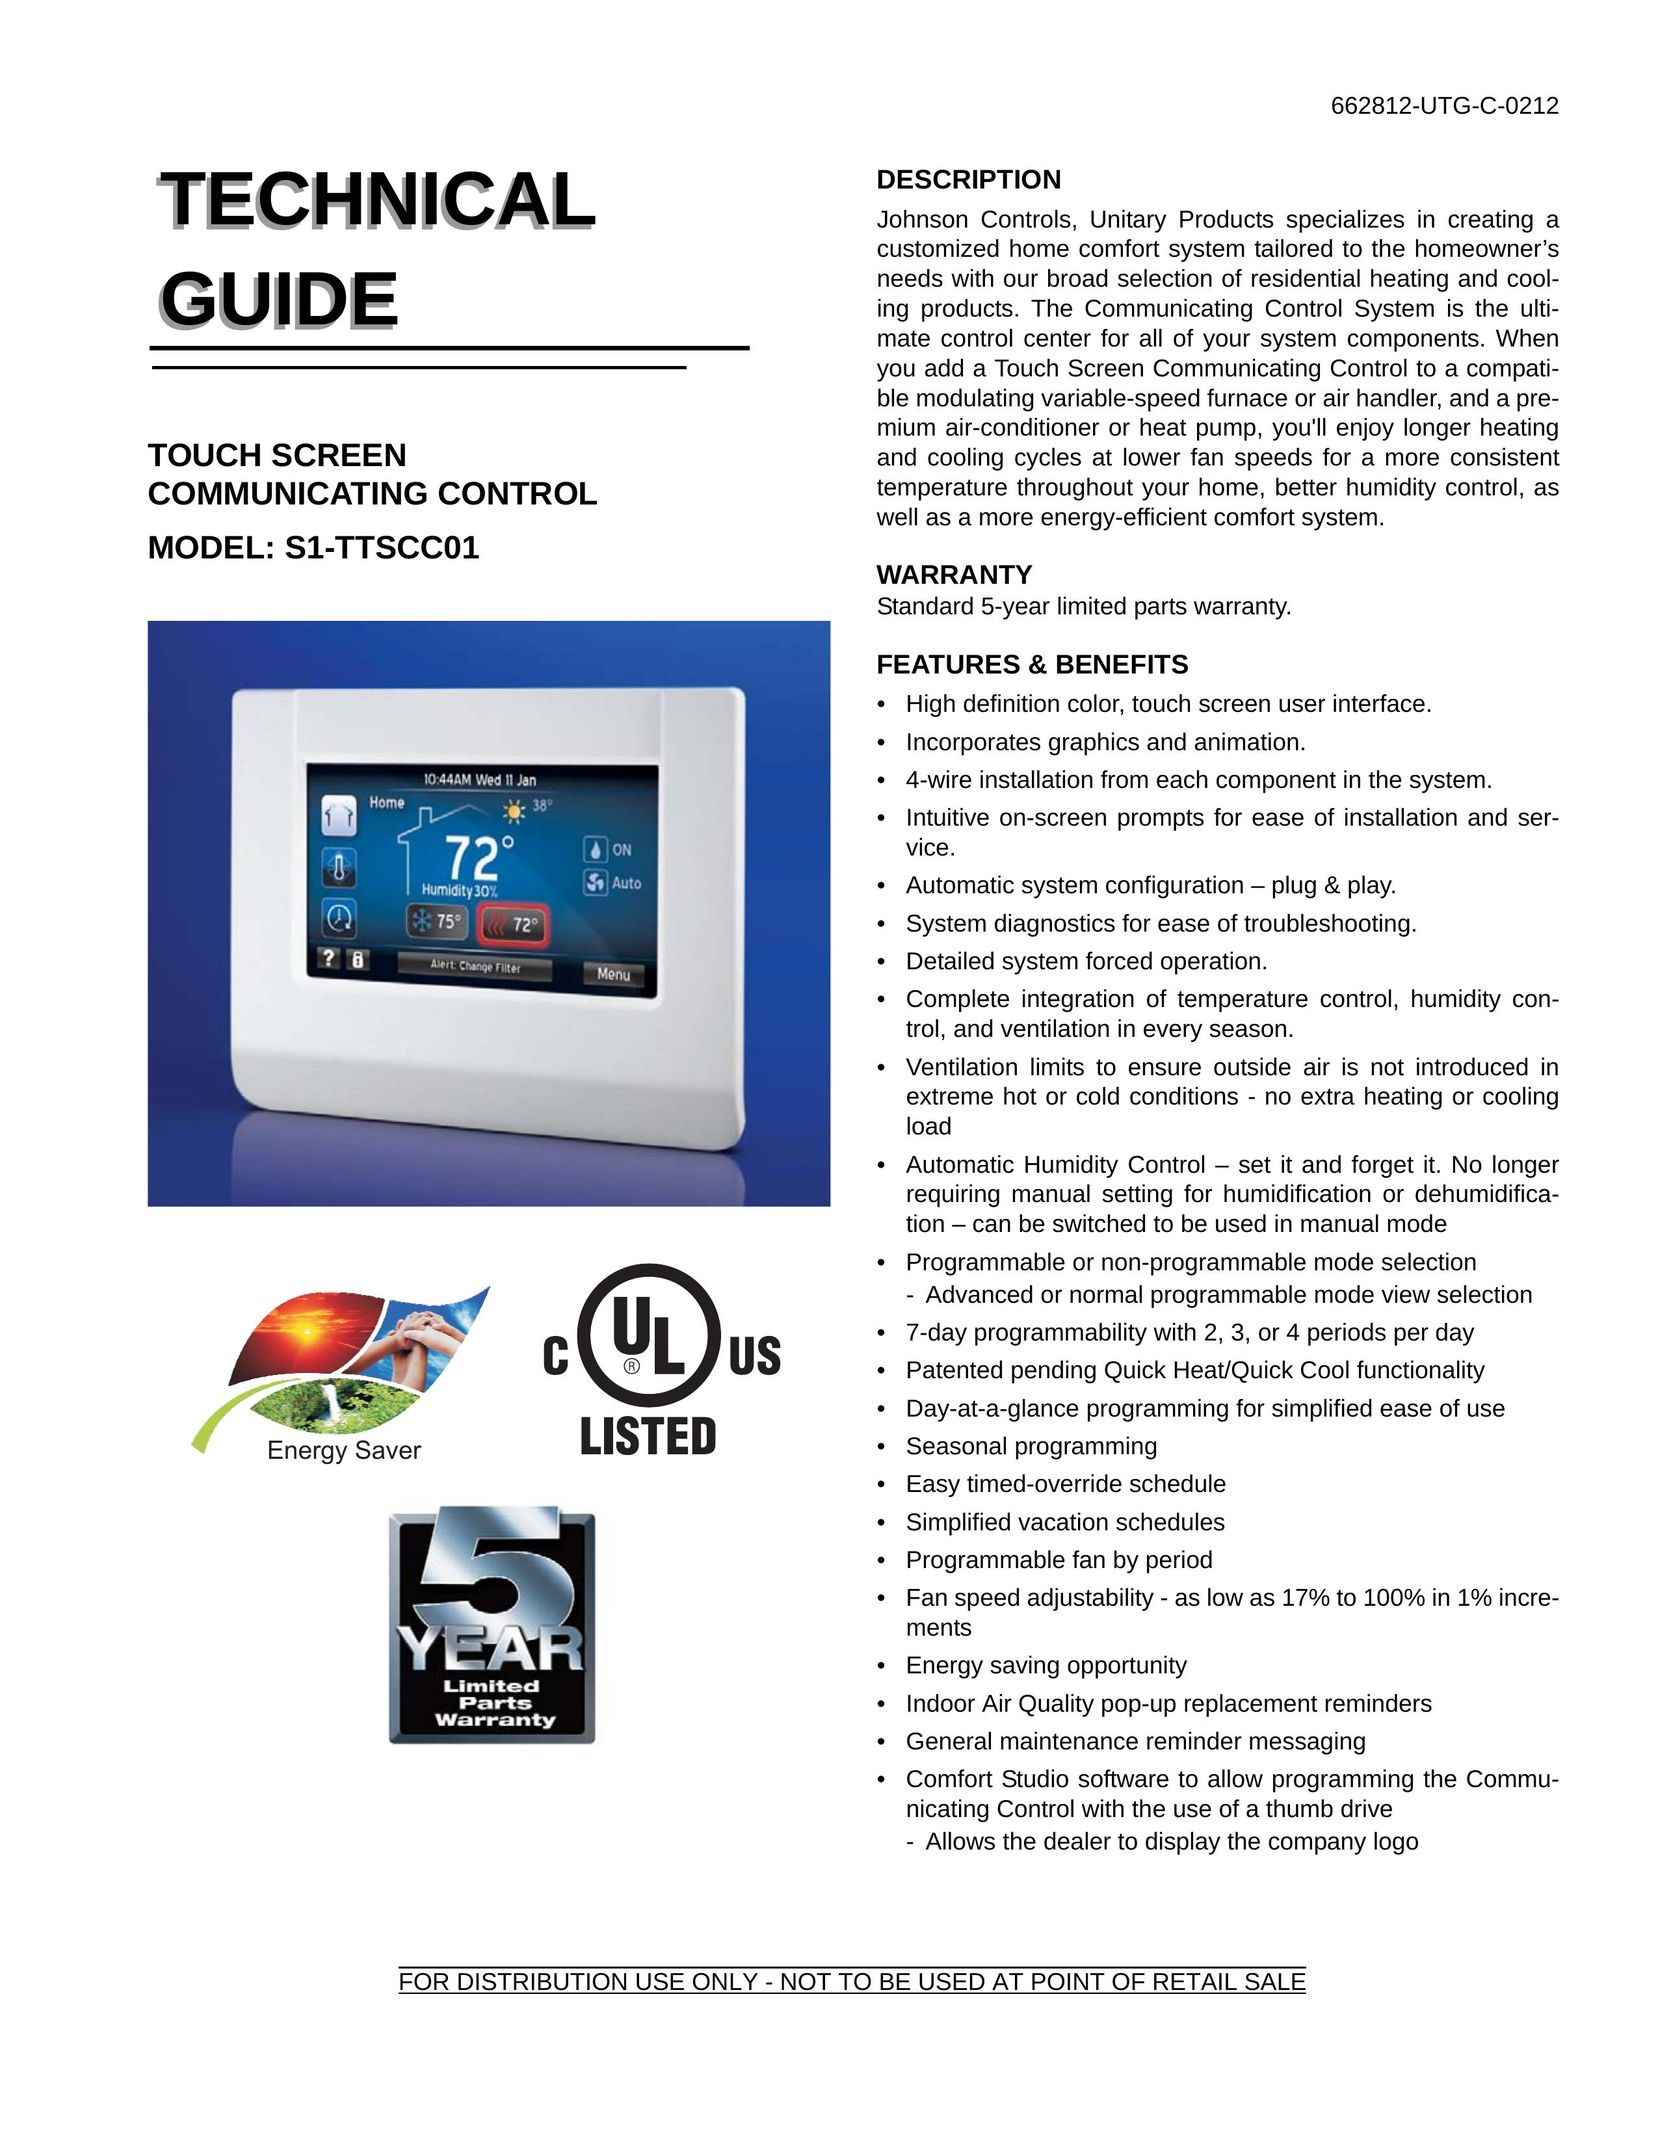 Johnson Controls S1-TTSCC01 Car Video System User Manual